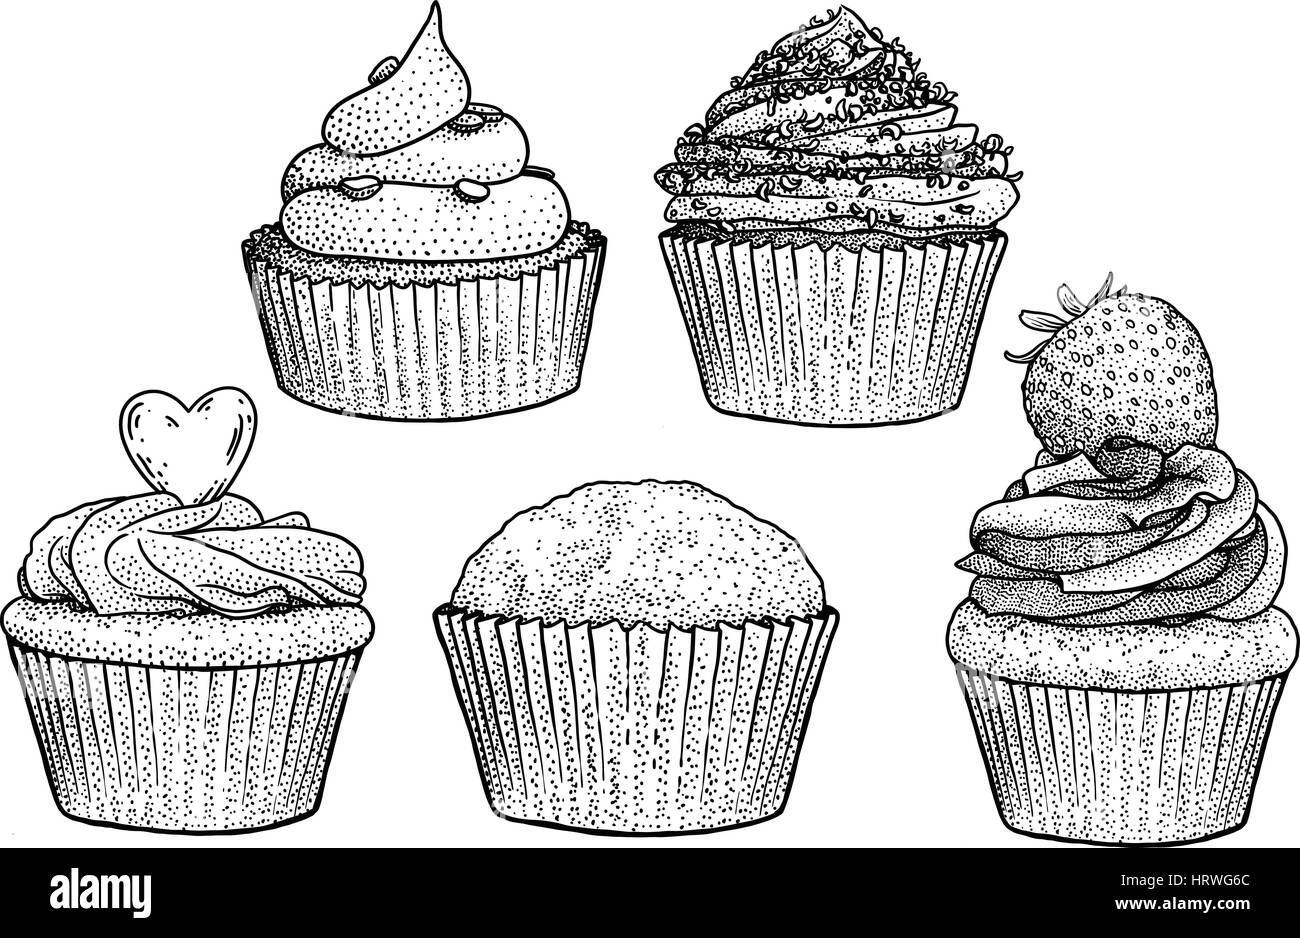 cupcake illustration drawing engraving ink line art vector HRWG6C